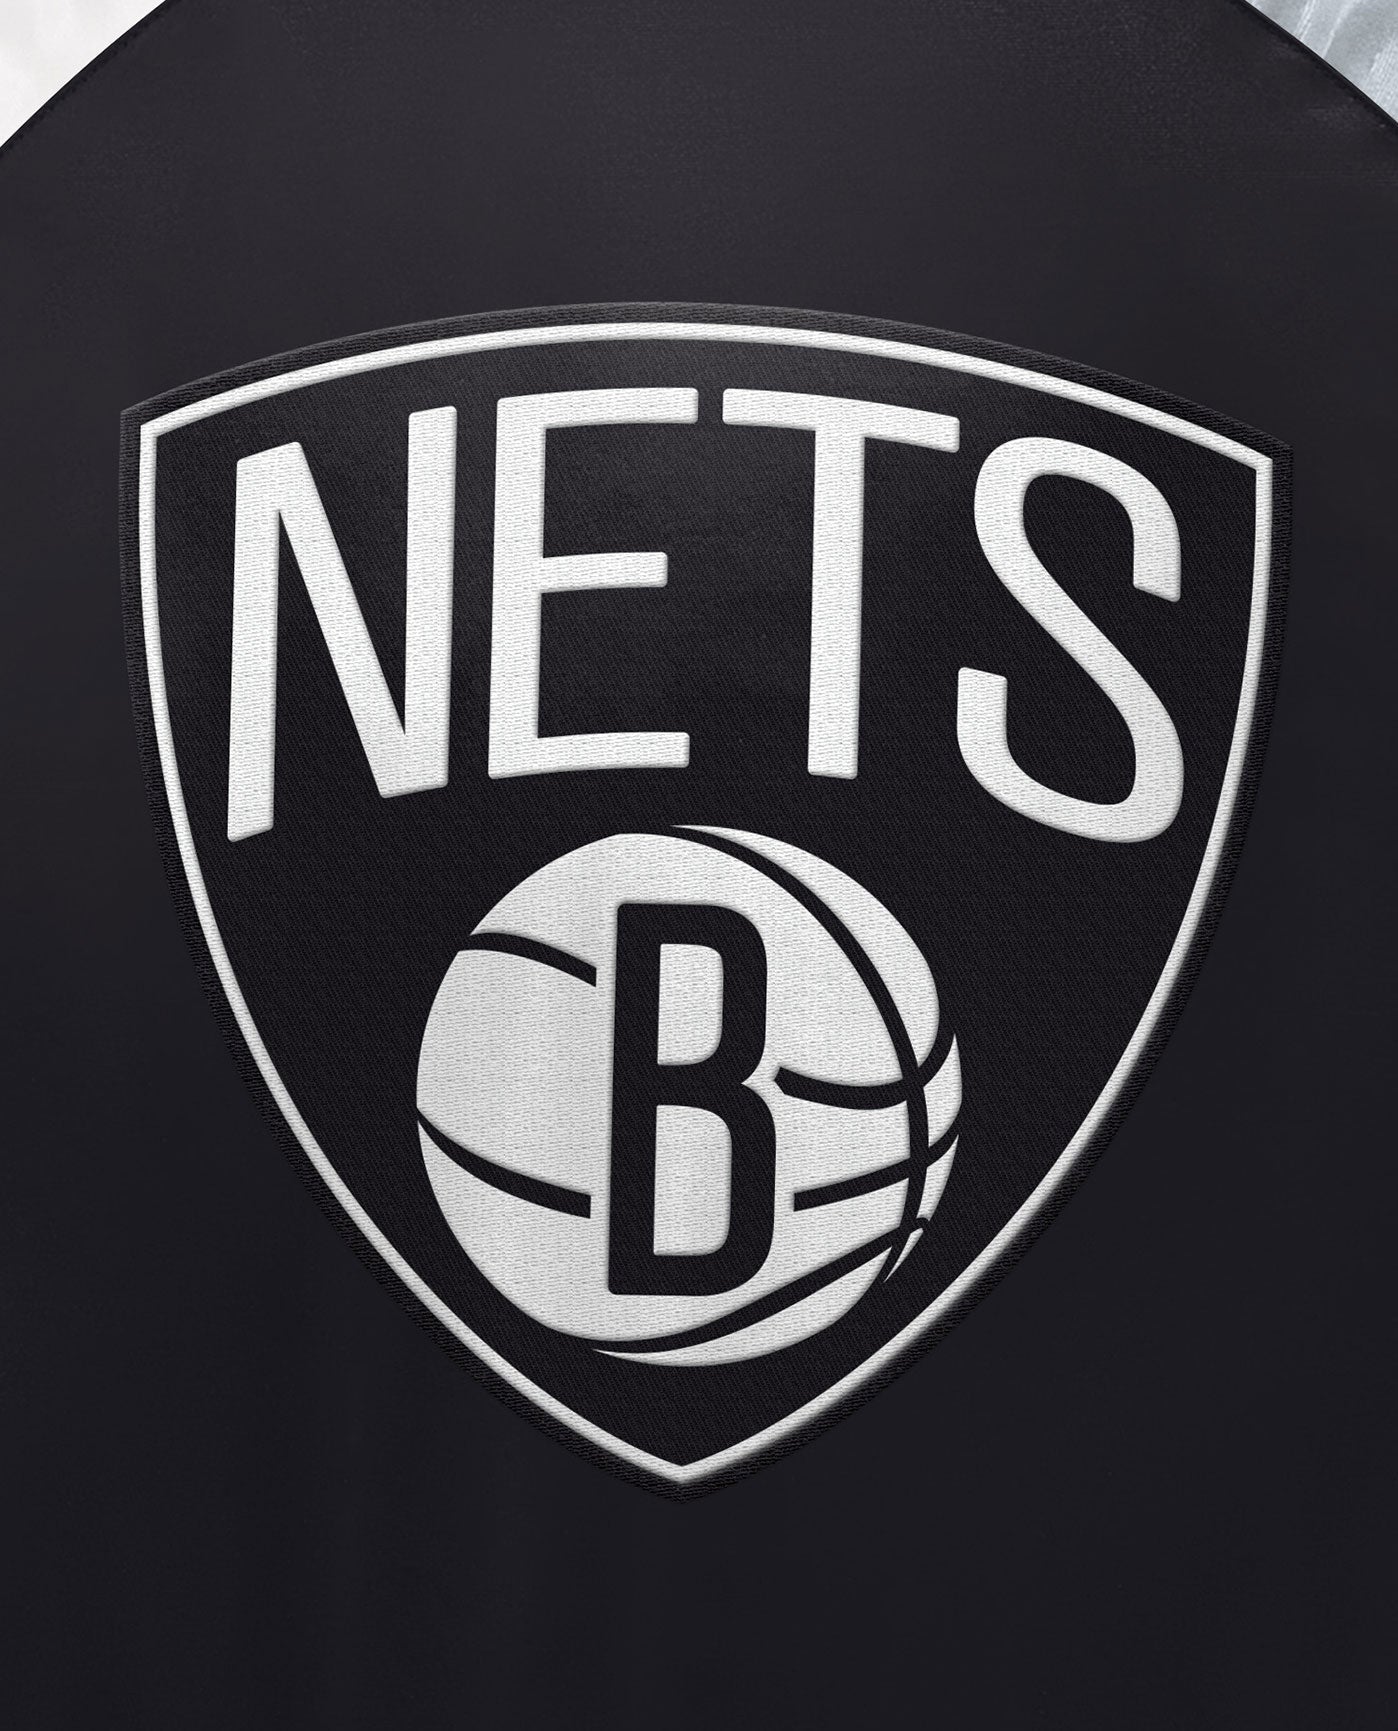 Ty Mopkins Brooklyn Nets Varsity Satin Black/Red Jacket